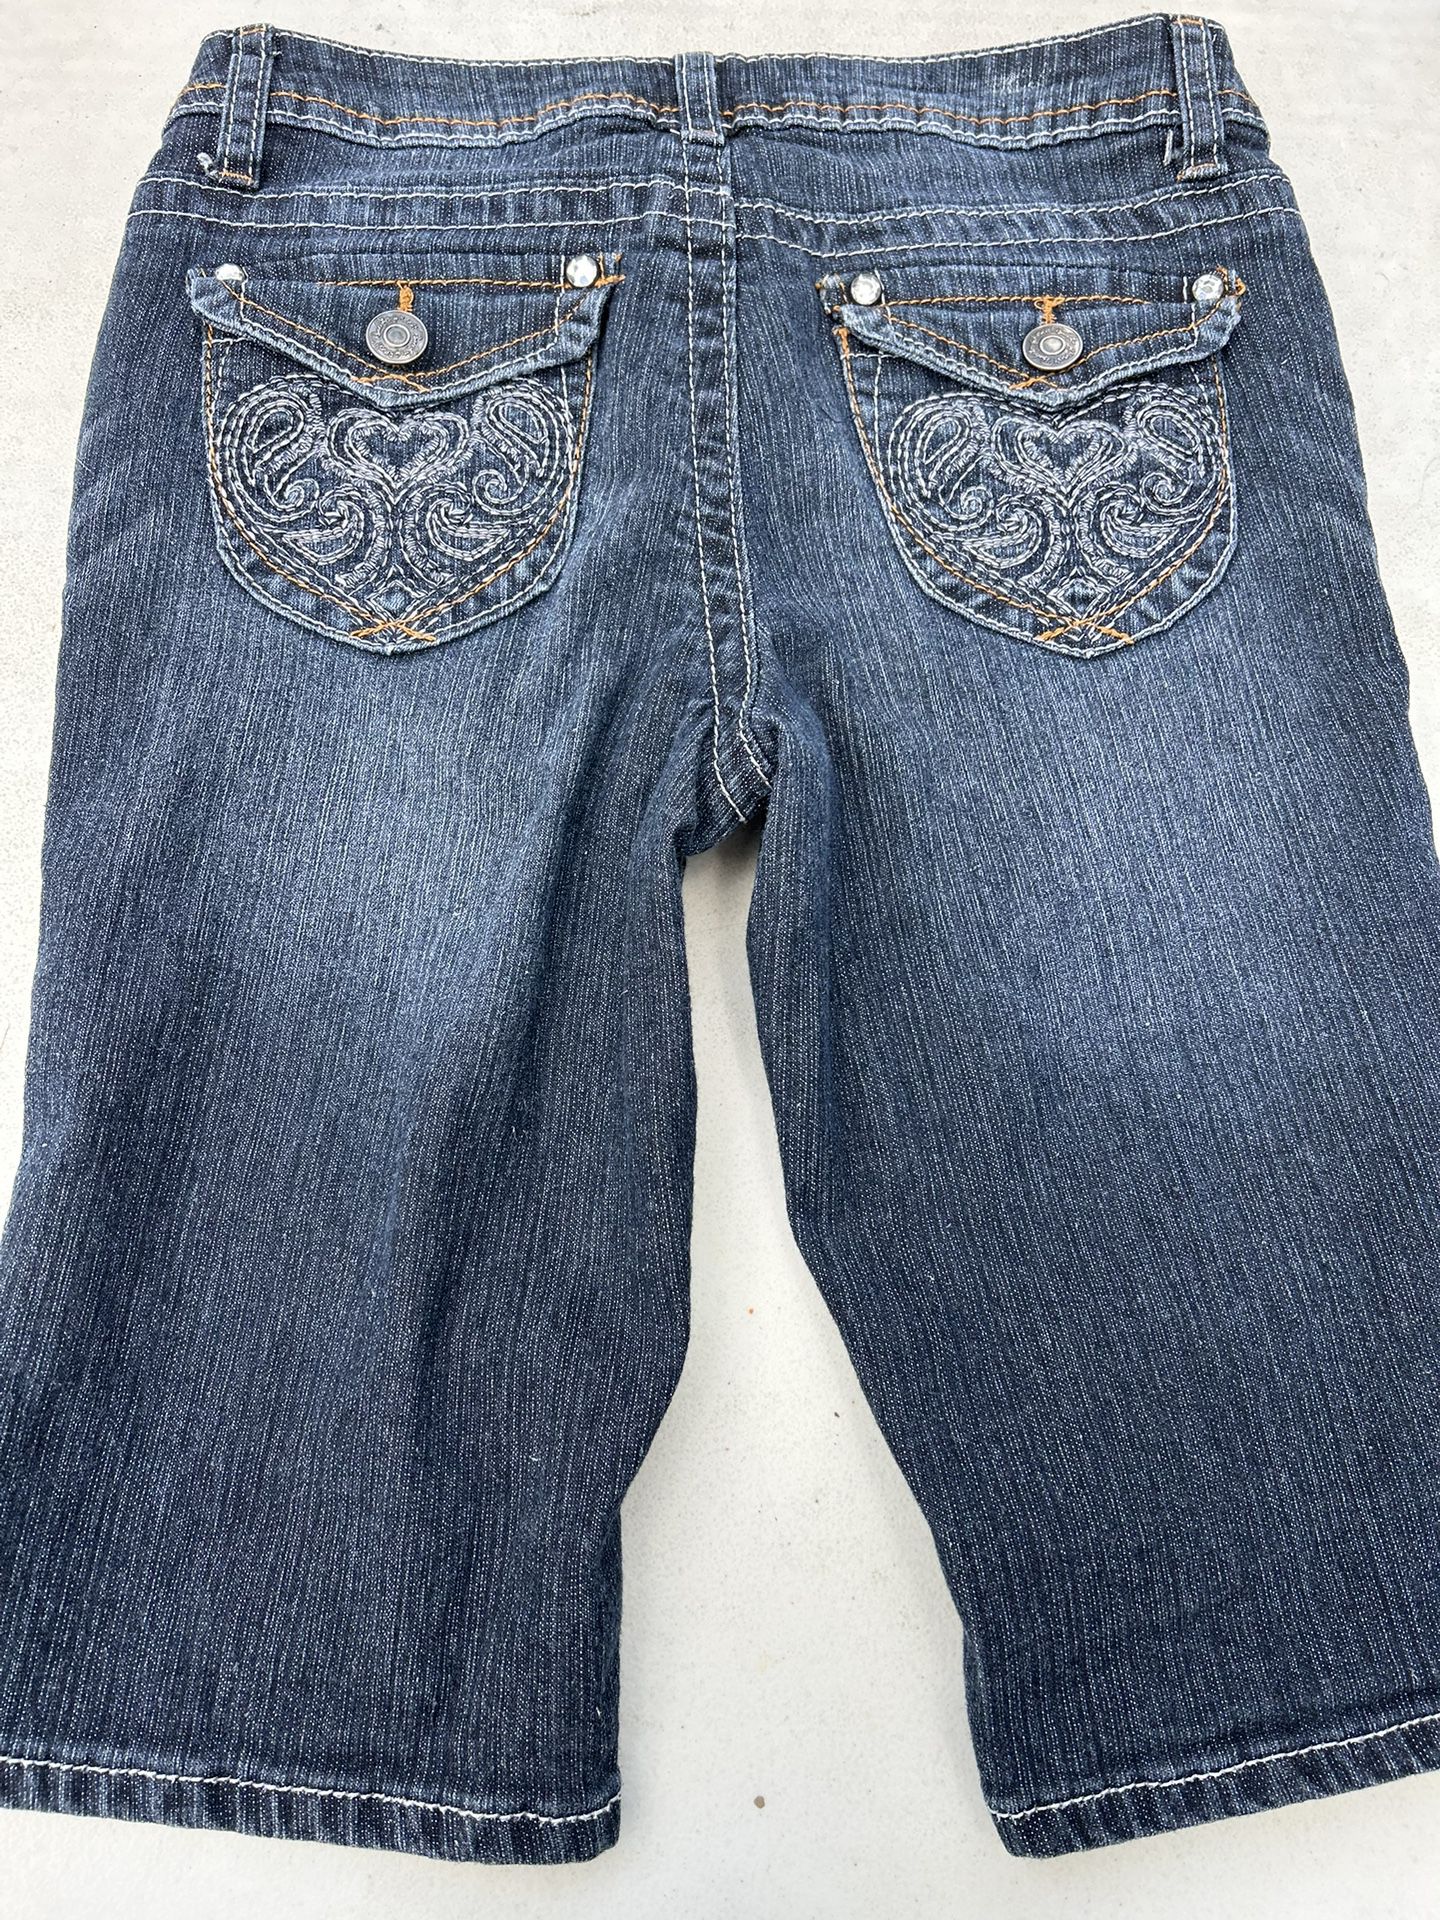 Blue Jean Long Shorts Size 10 